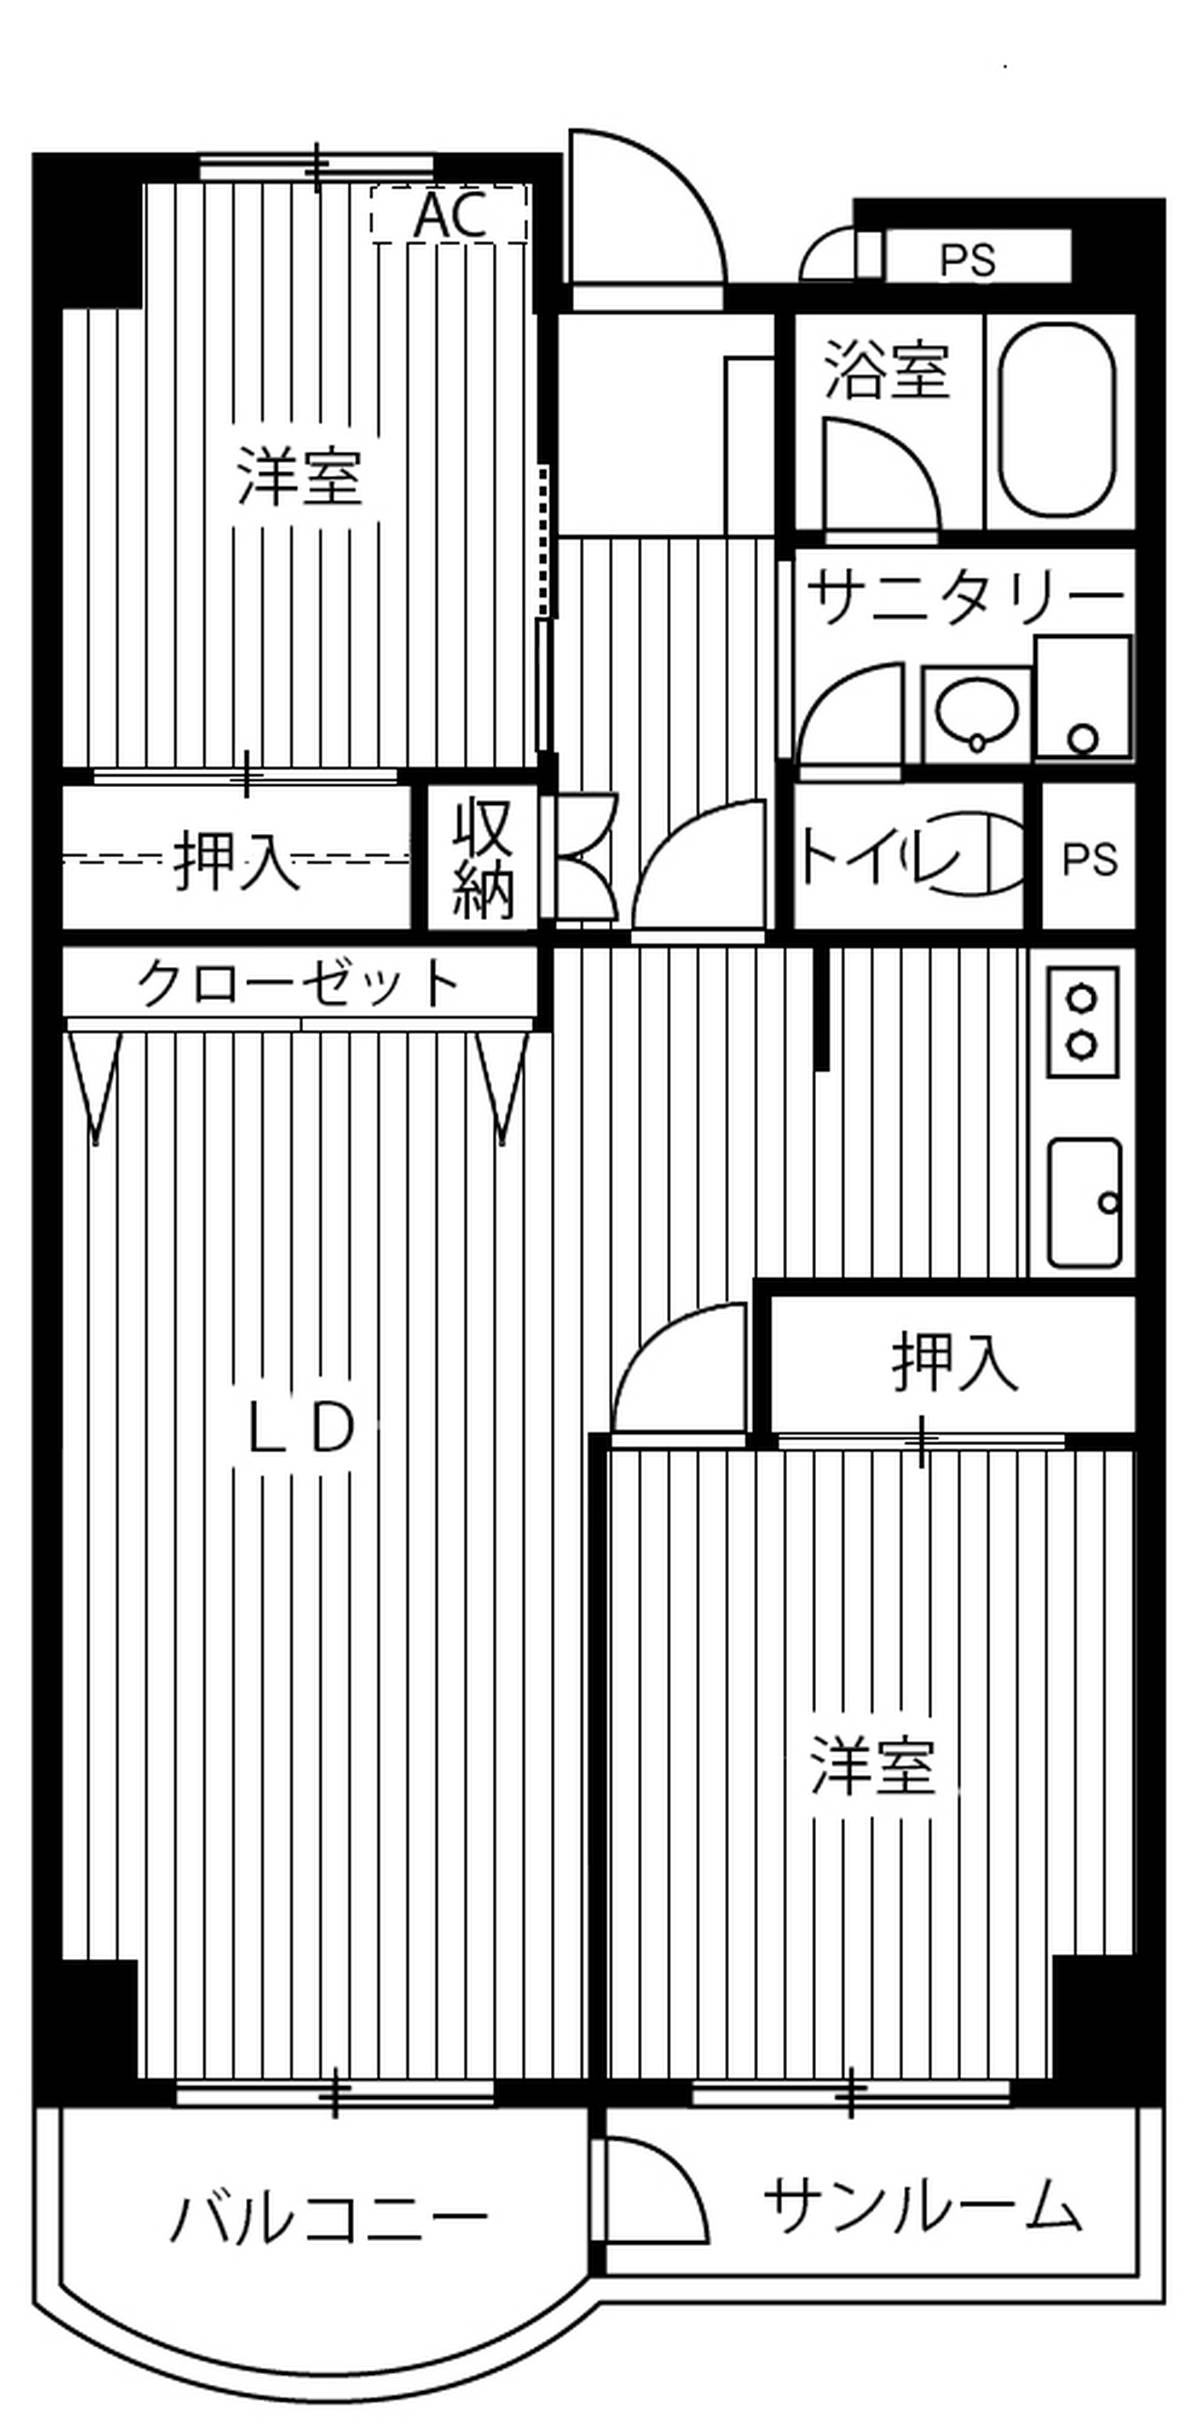 2LDK floorplan of Village House Kanazawa Tower in Kanazawa-shi